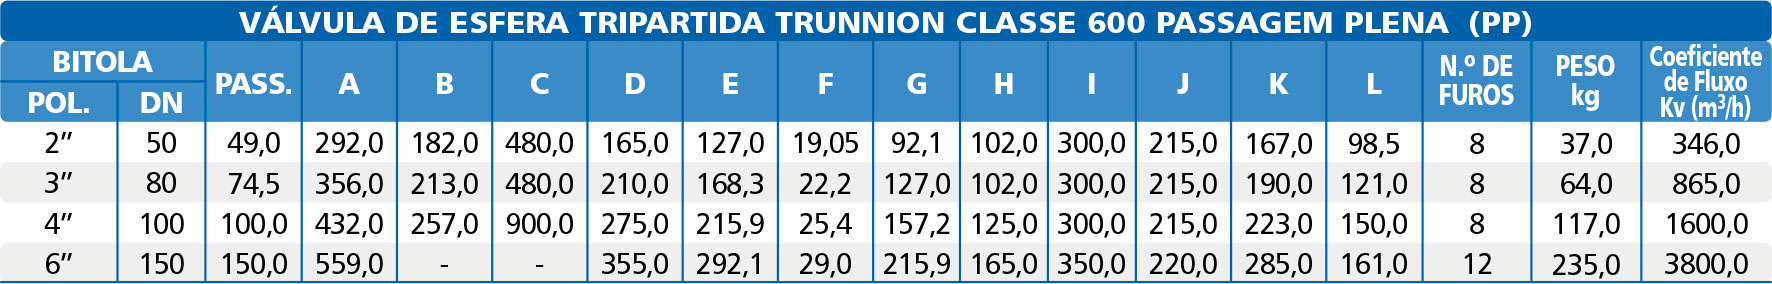 Valvula-de-Esfera-Tripartida-Trunnion-Classes-600-tabela